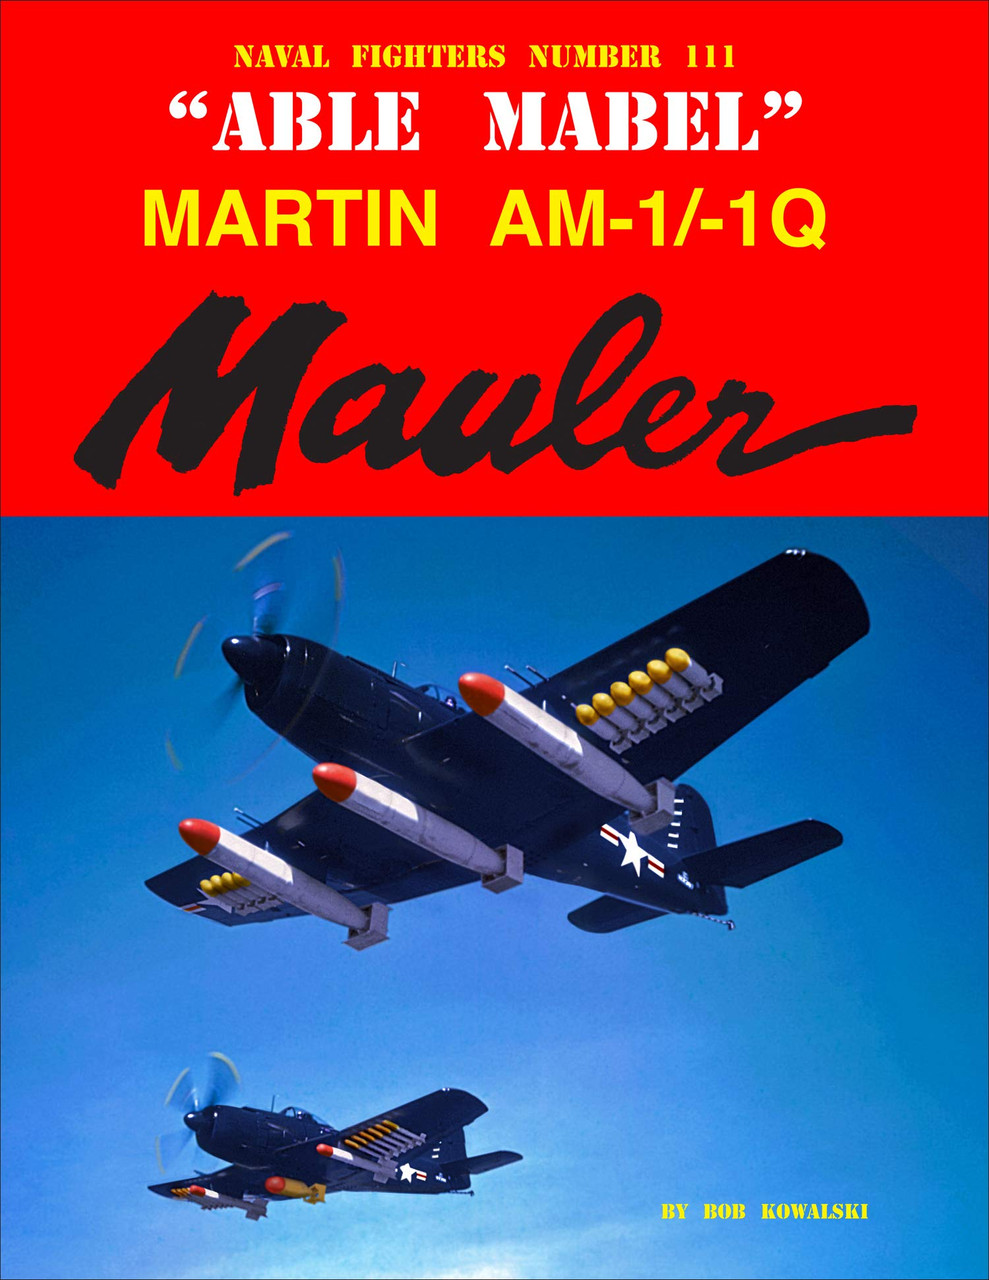 NF111 - "Able Mabel" Martin AM-1/1Q Mauler